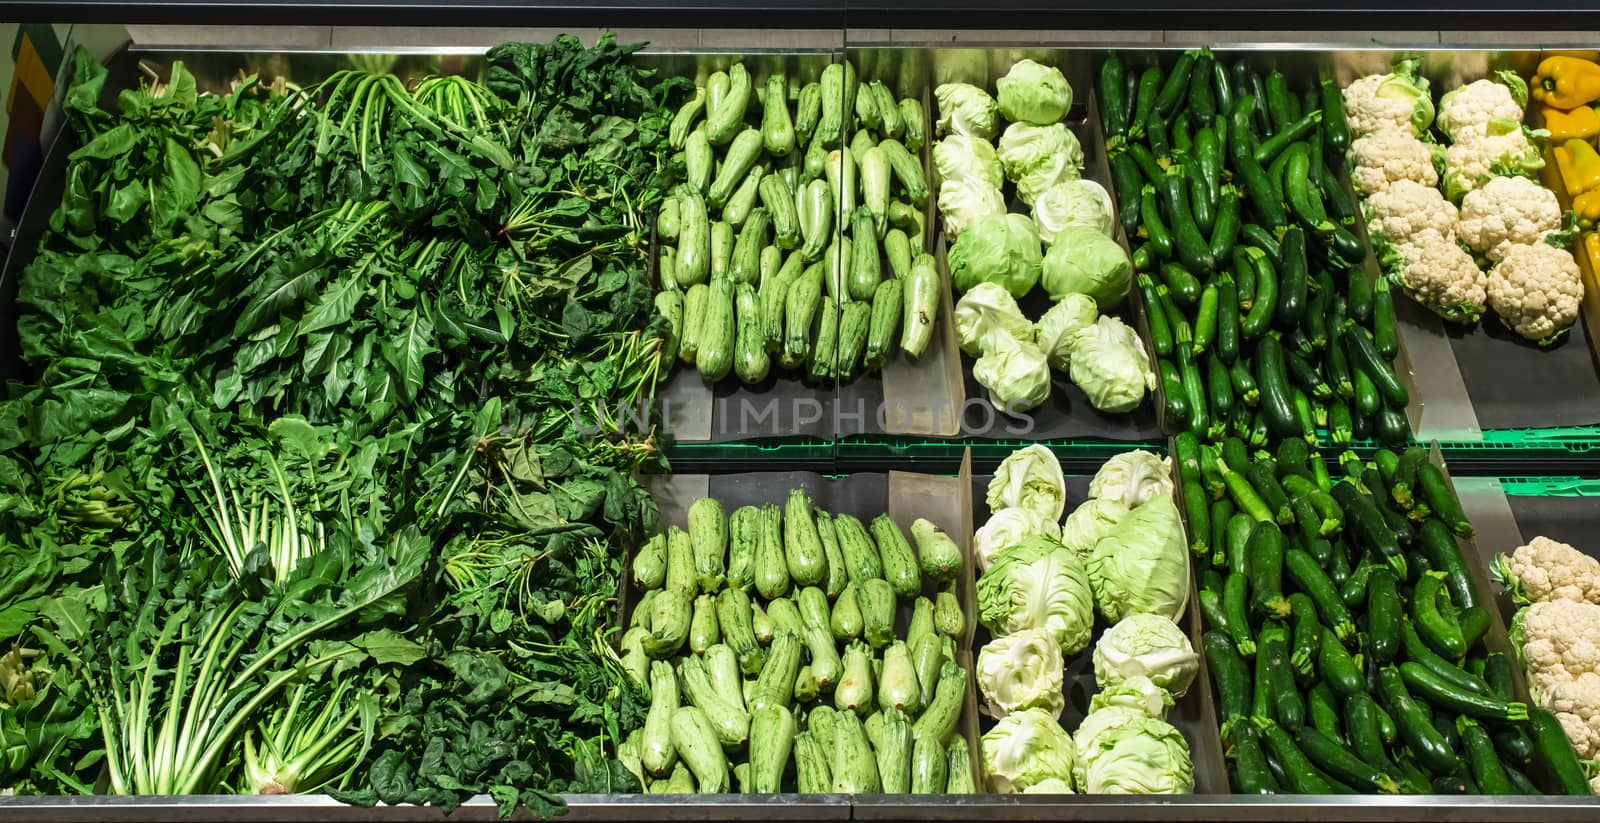 Vegetables on shelf in supermarket. Cabbage, zucchini, pepper and cauliflower.